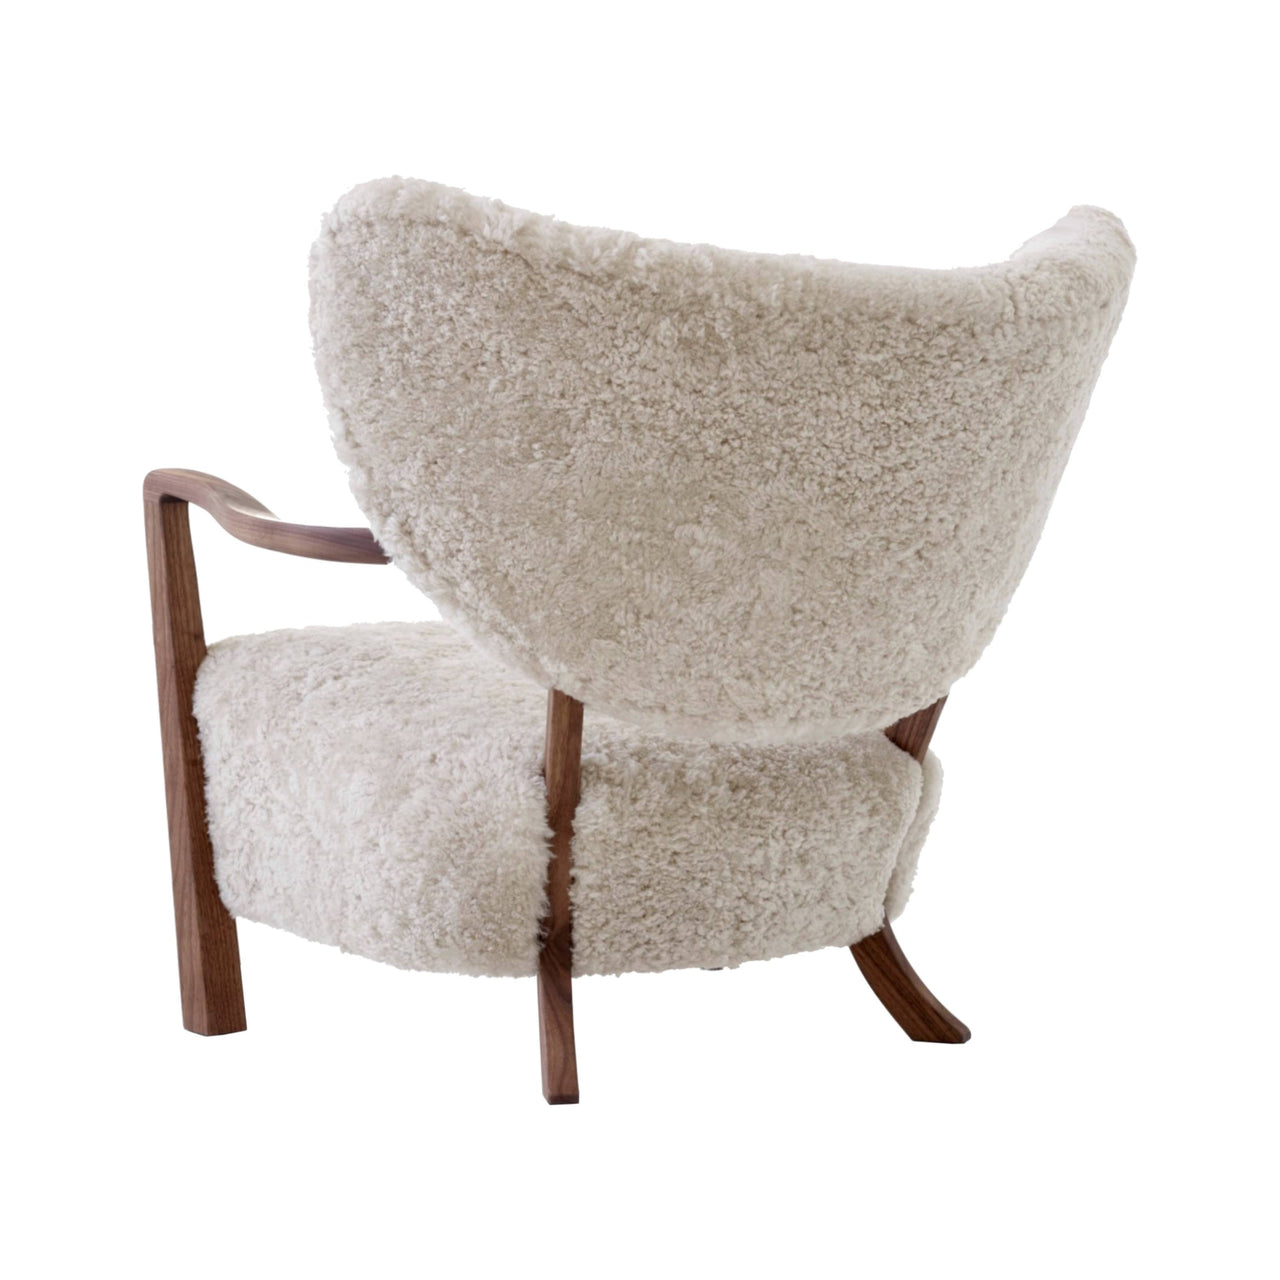 Wulff Lounge Chair ATD2: Walnut + Sheepskin Moonlight